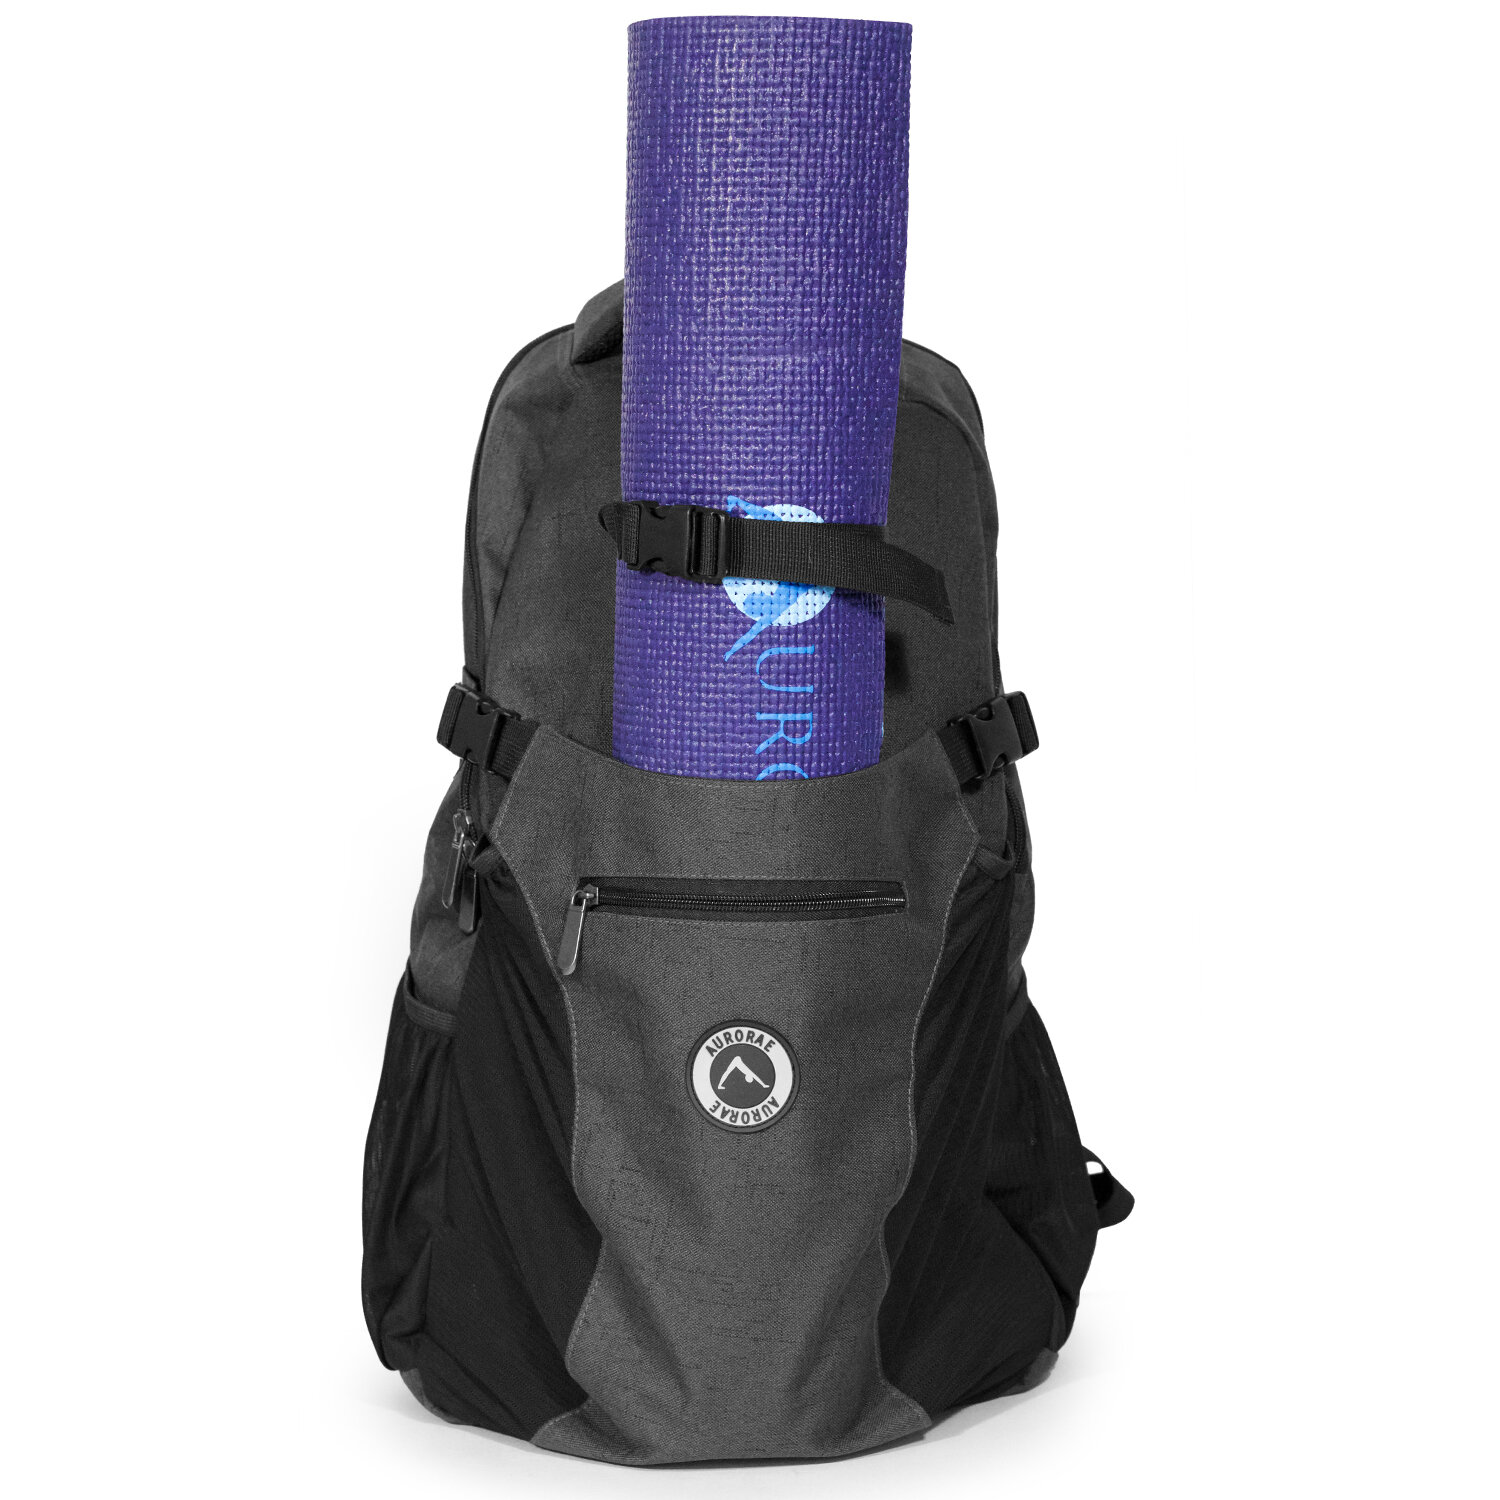 Aurorae Yoga Multi Purpose Backpack. Mat Sold Separately (Snow